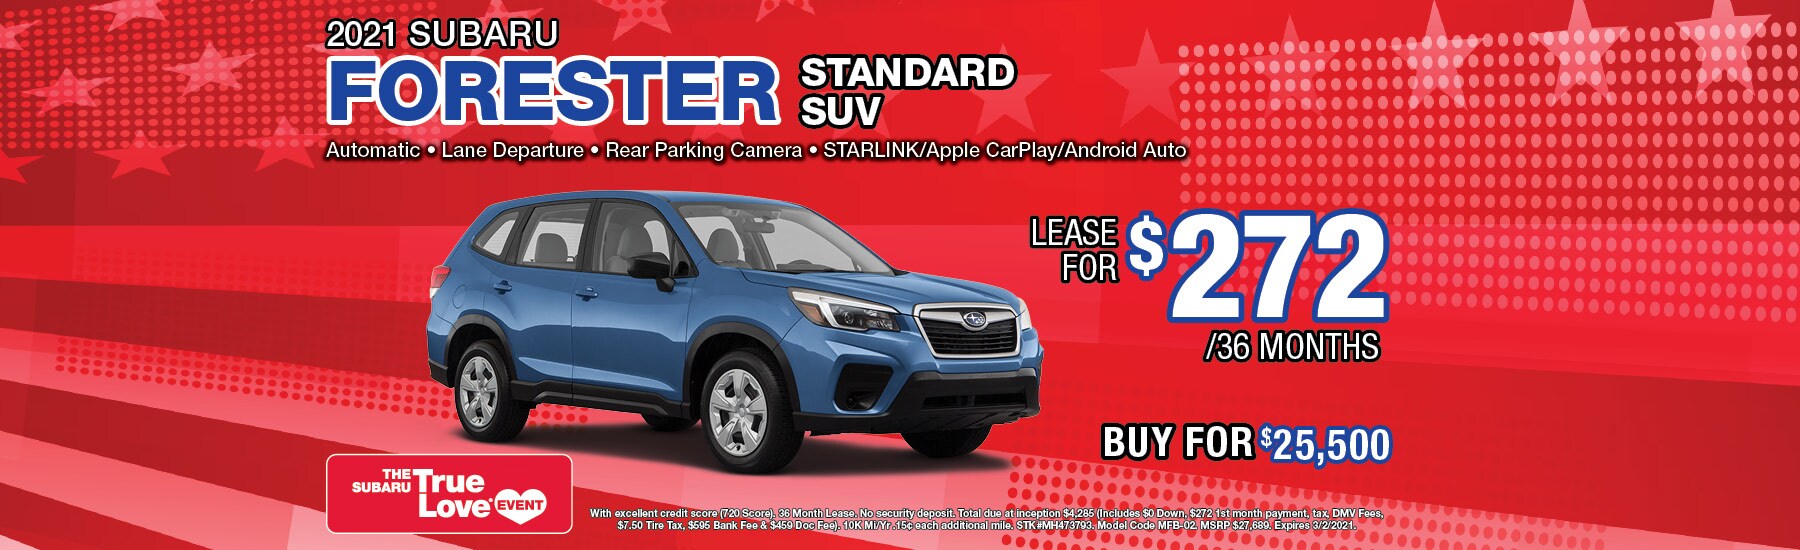 New Subaru Dealer Near Me | New Subaru For Sale in New Jersey